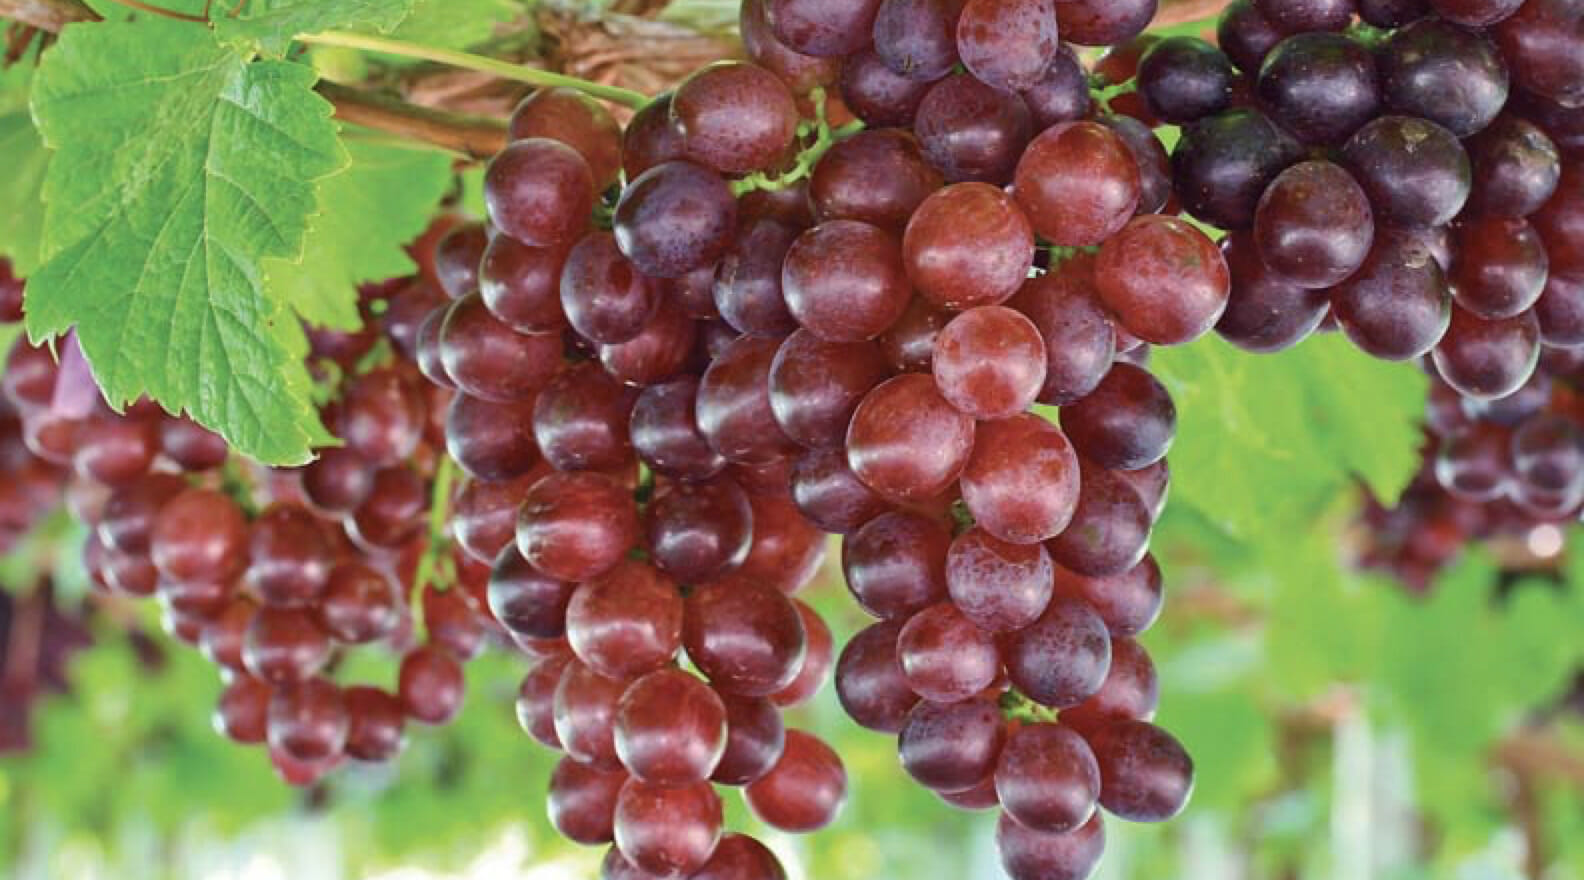 Catawba grapes